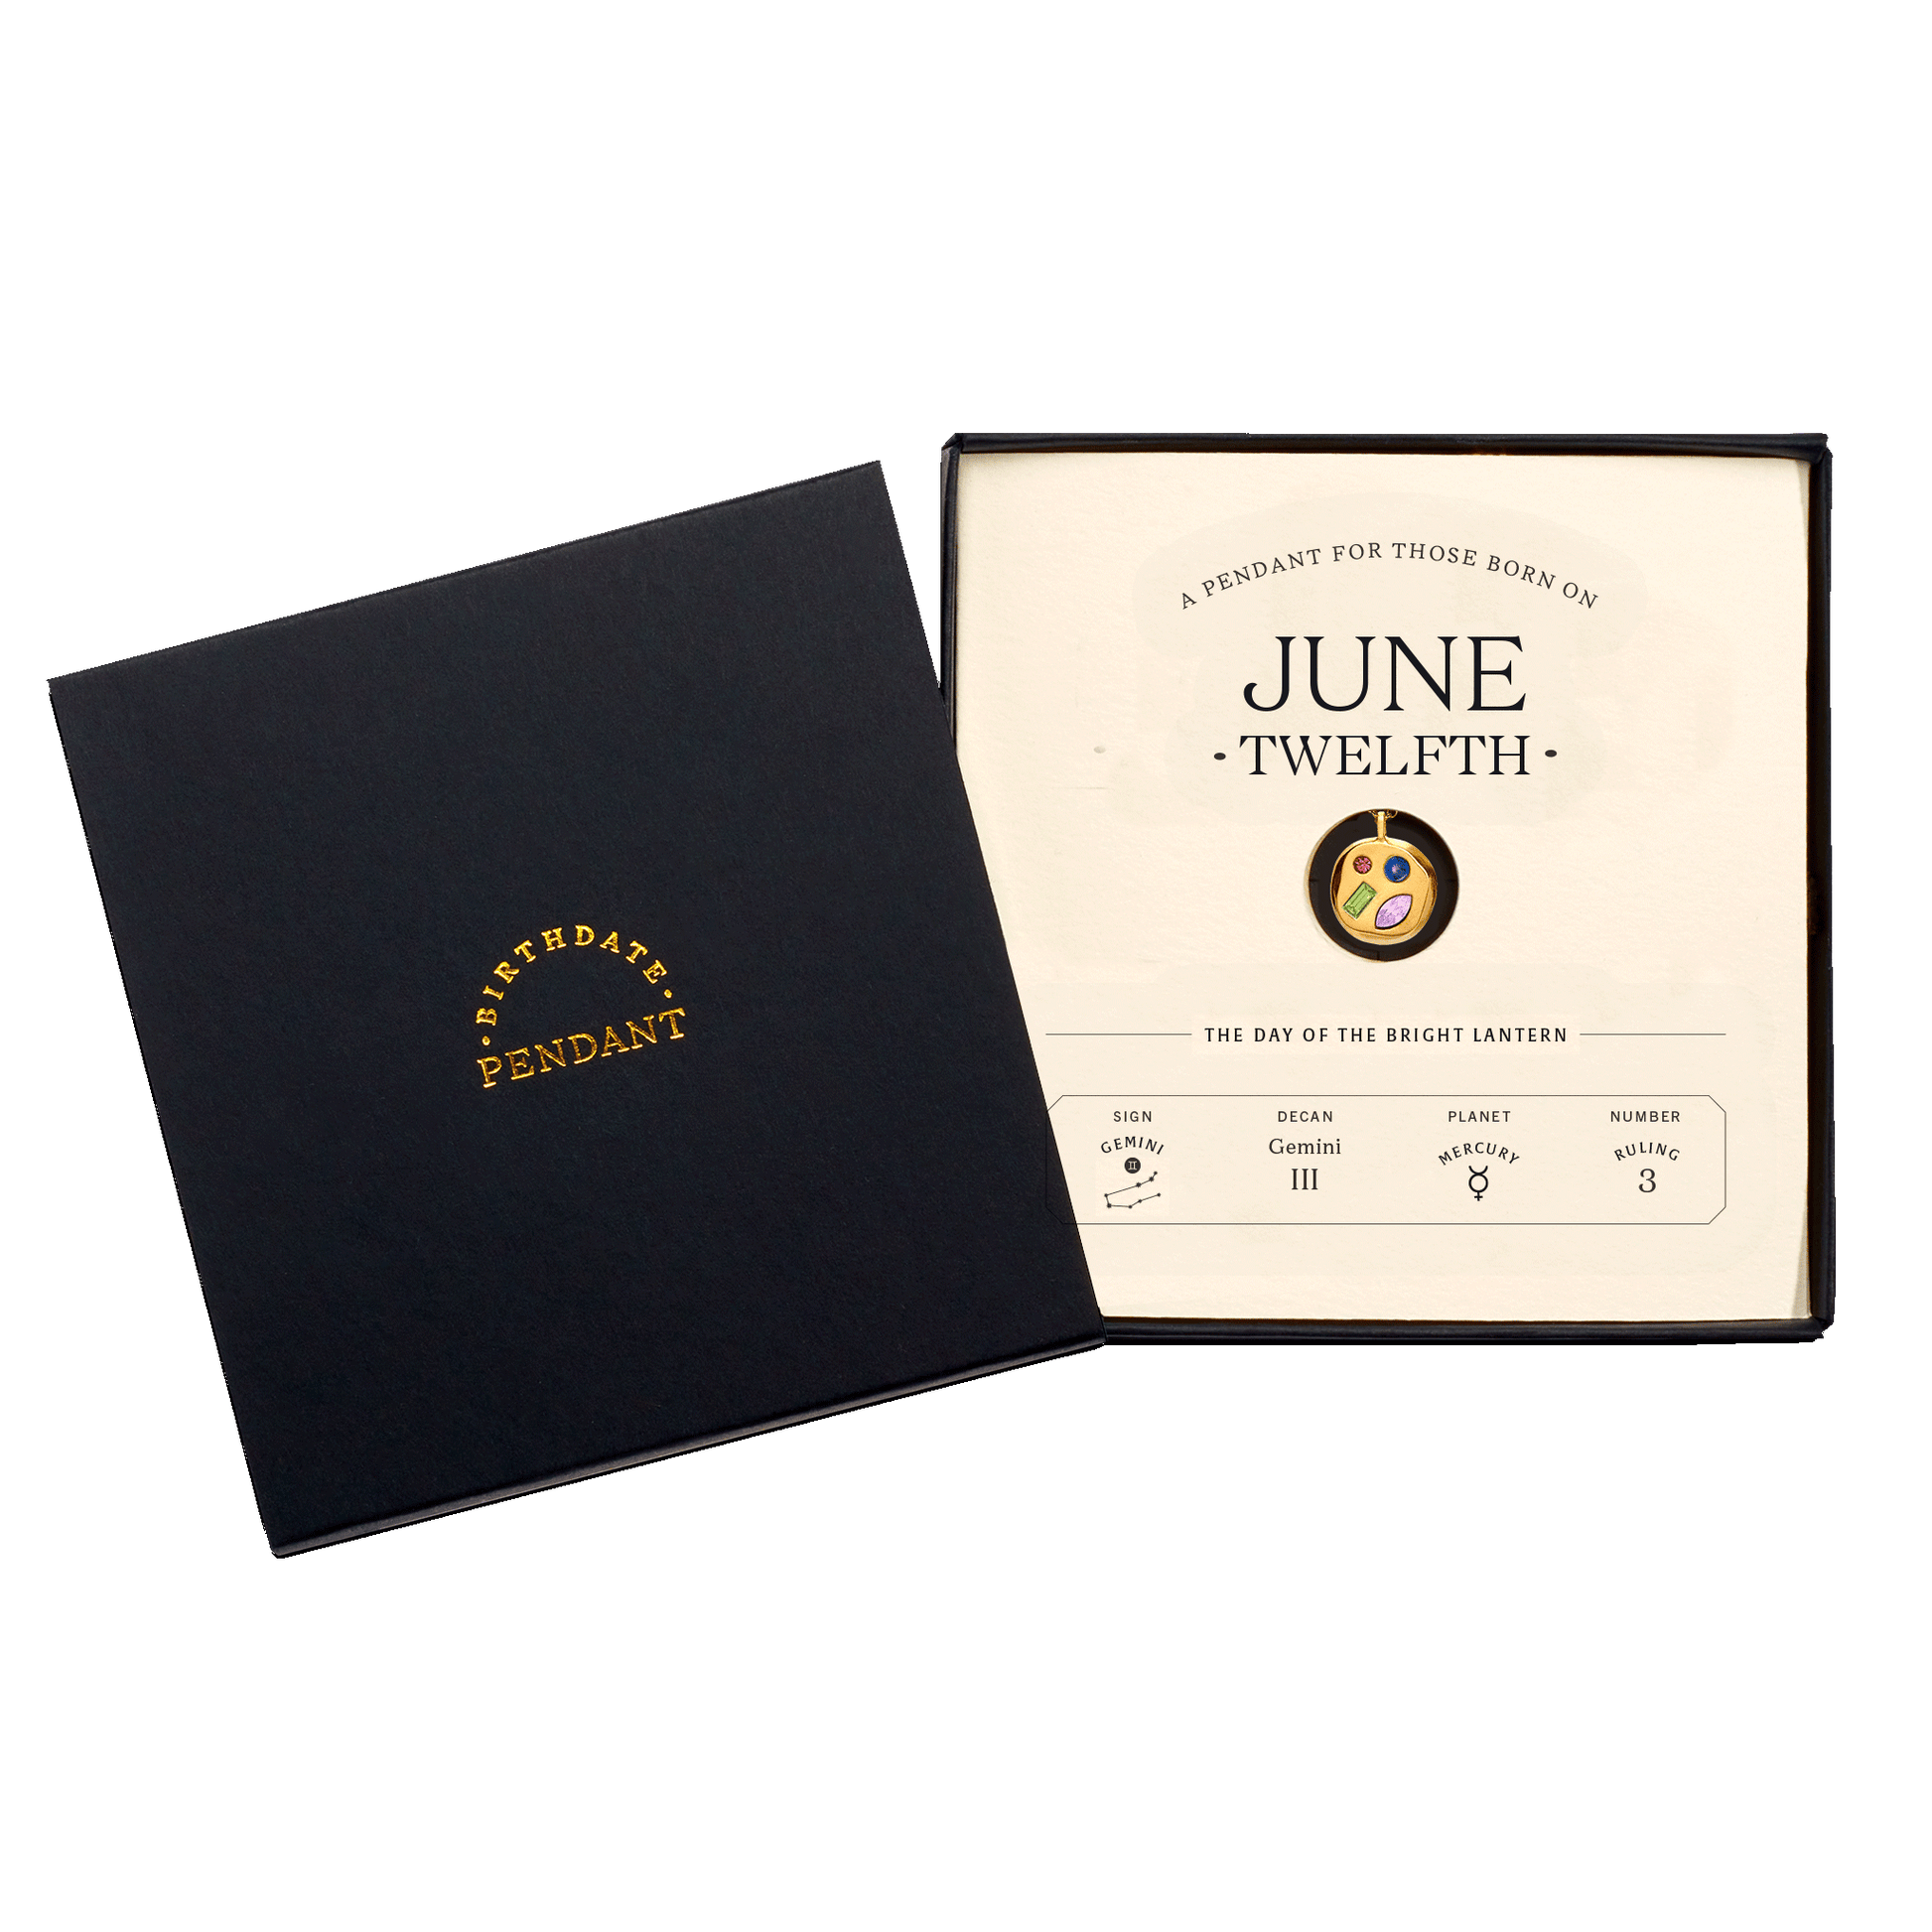 The June Twelfth Pendant inside its box